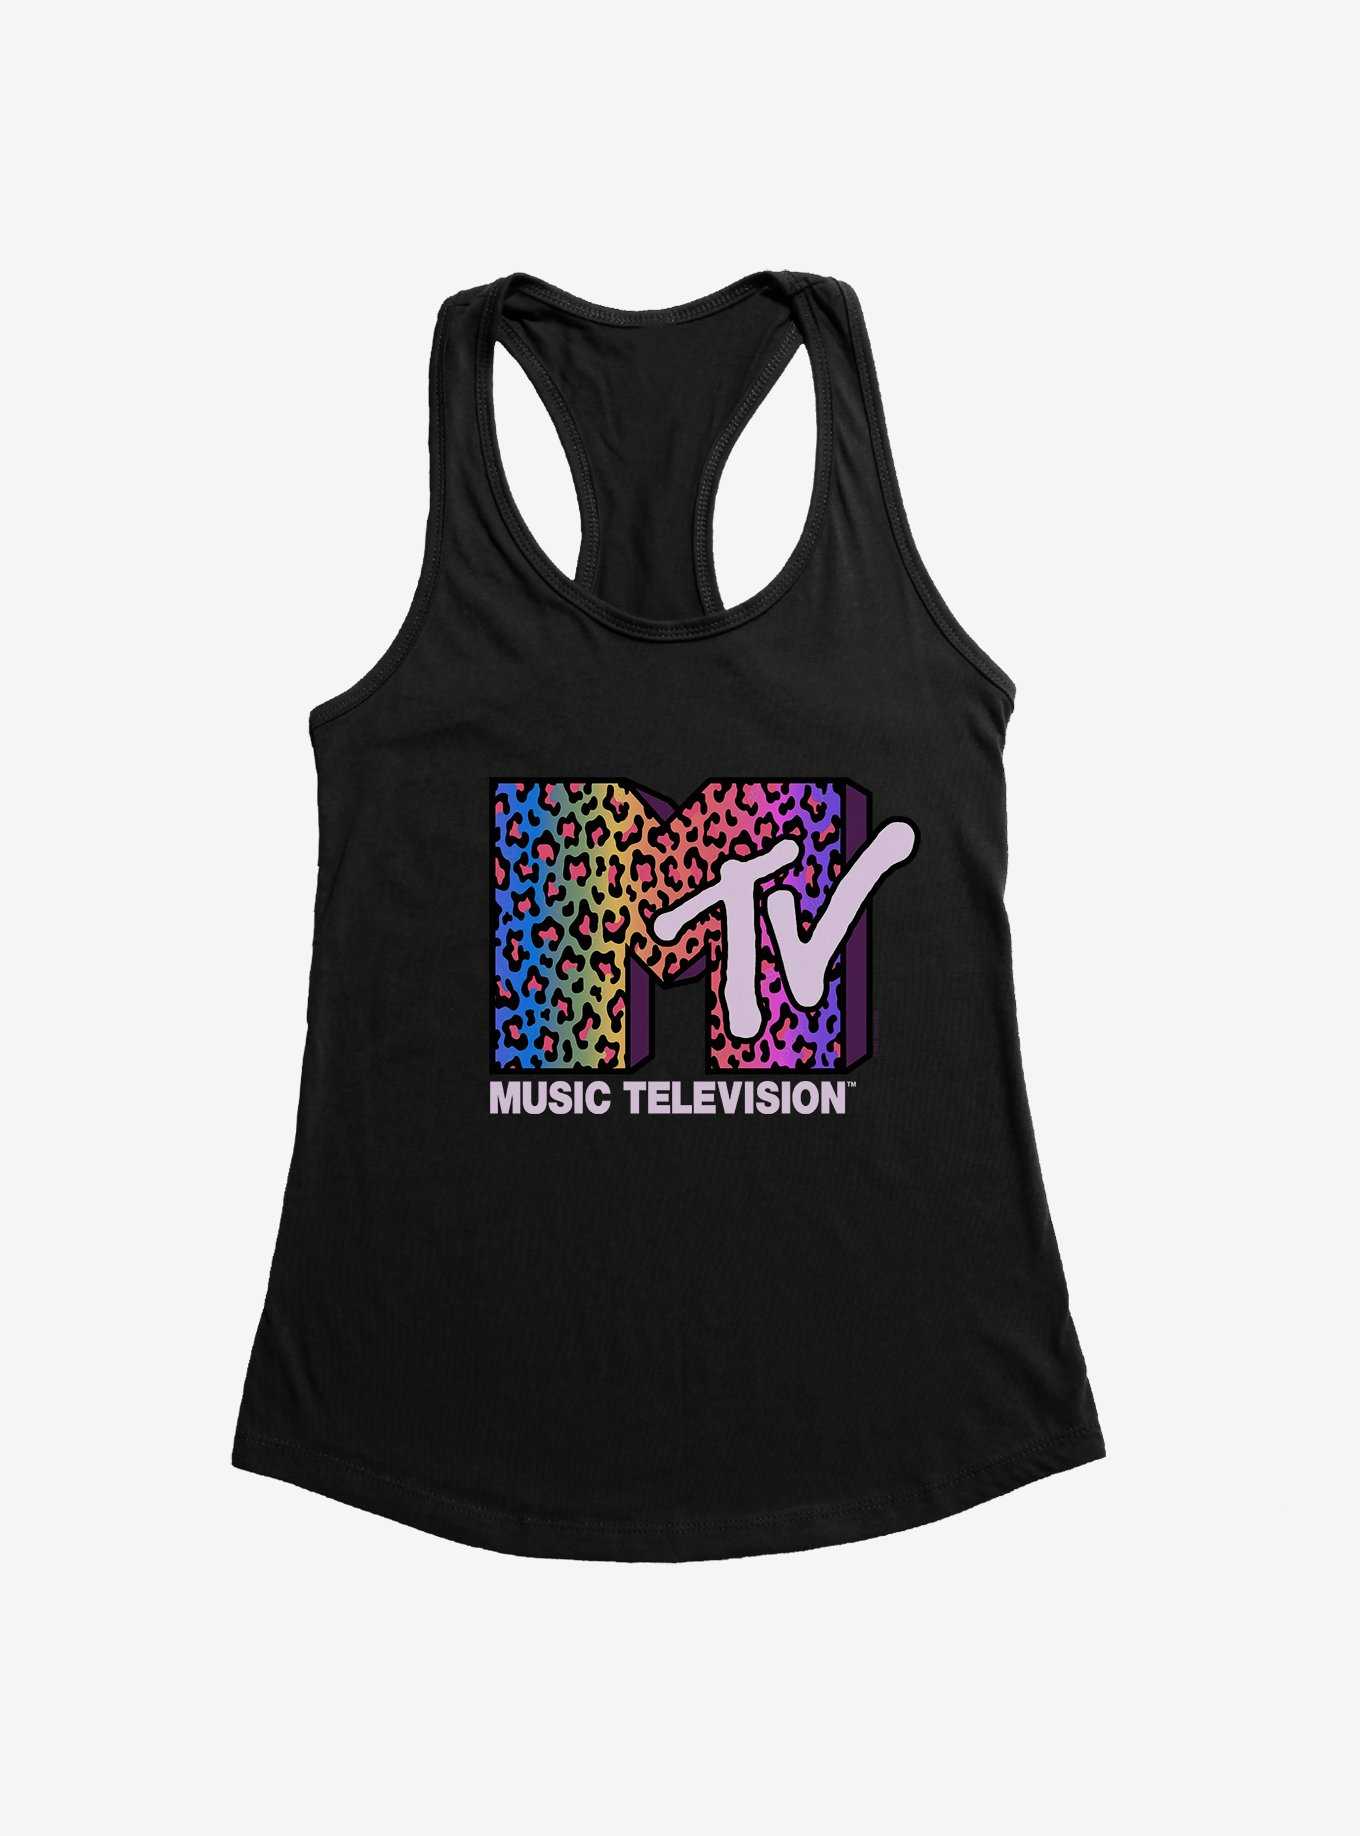 OFFICIAL MTV Shirts & Merchandise